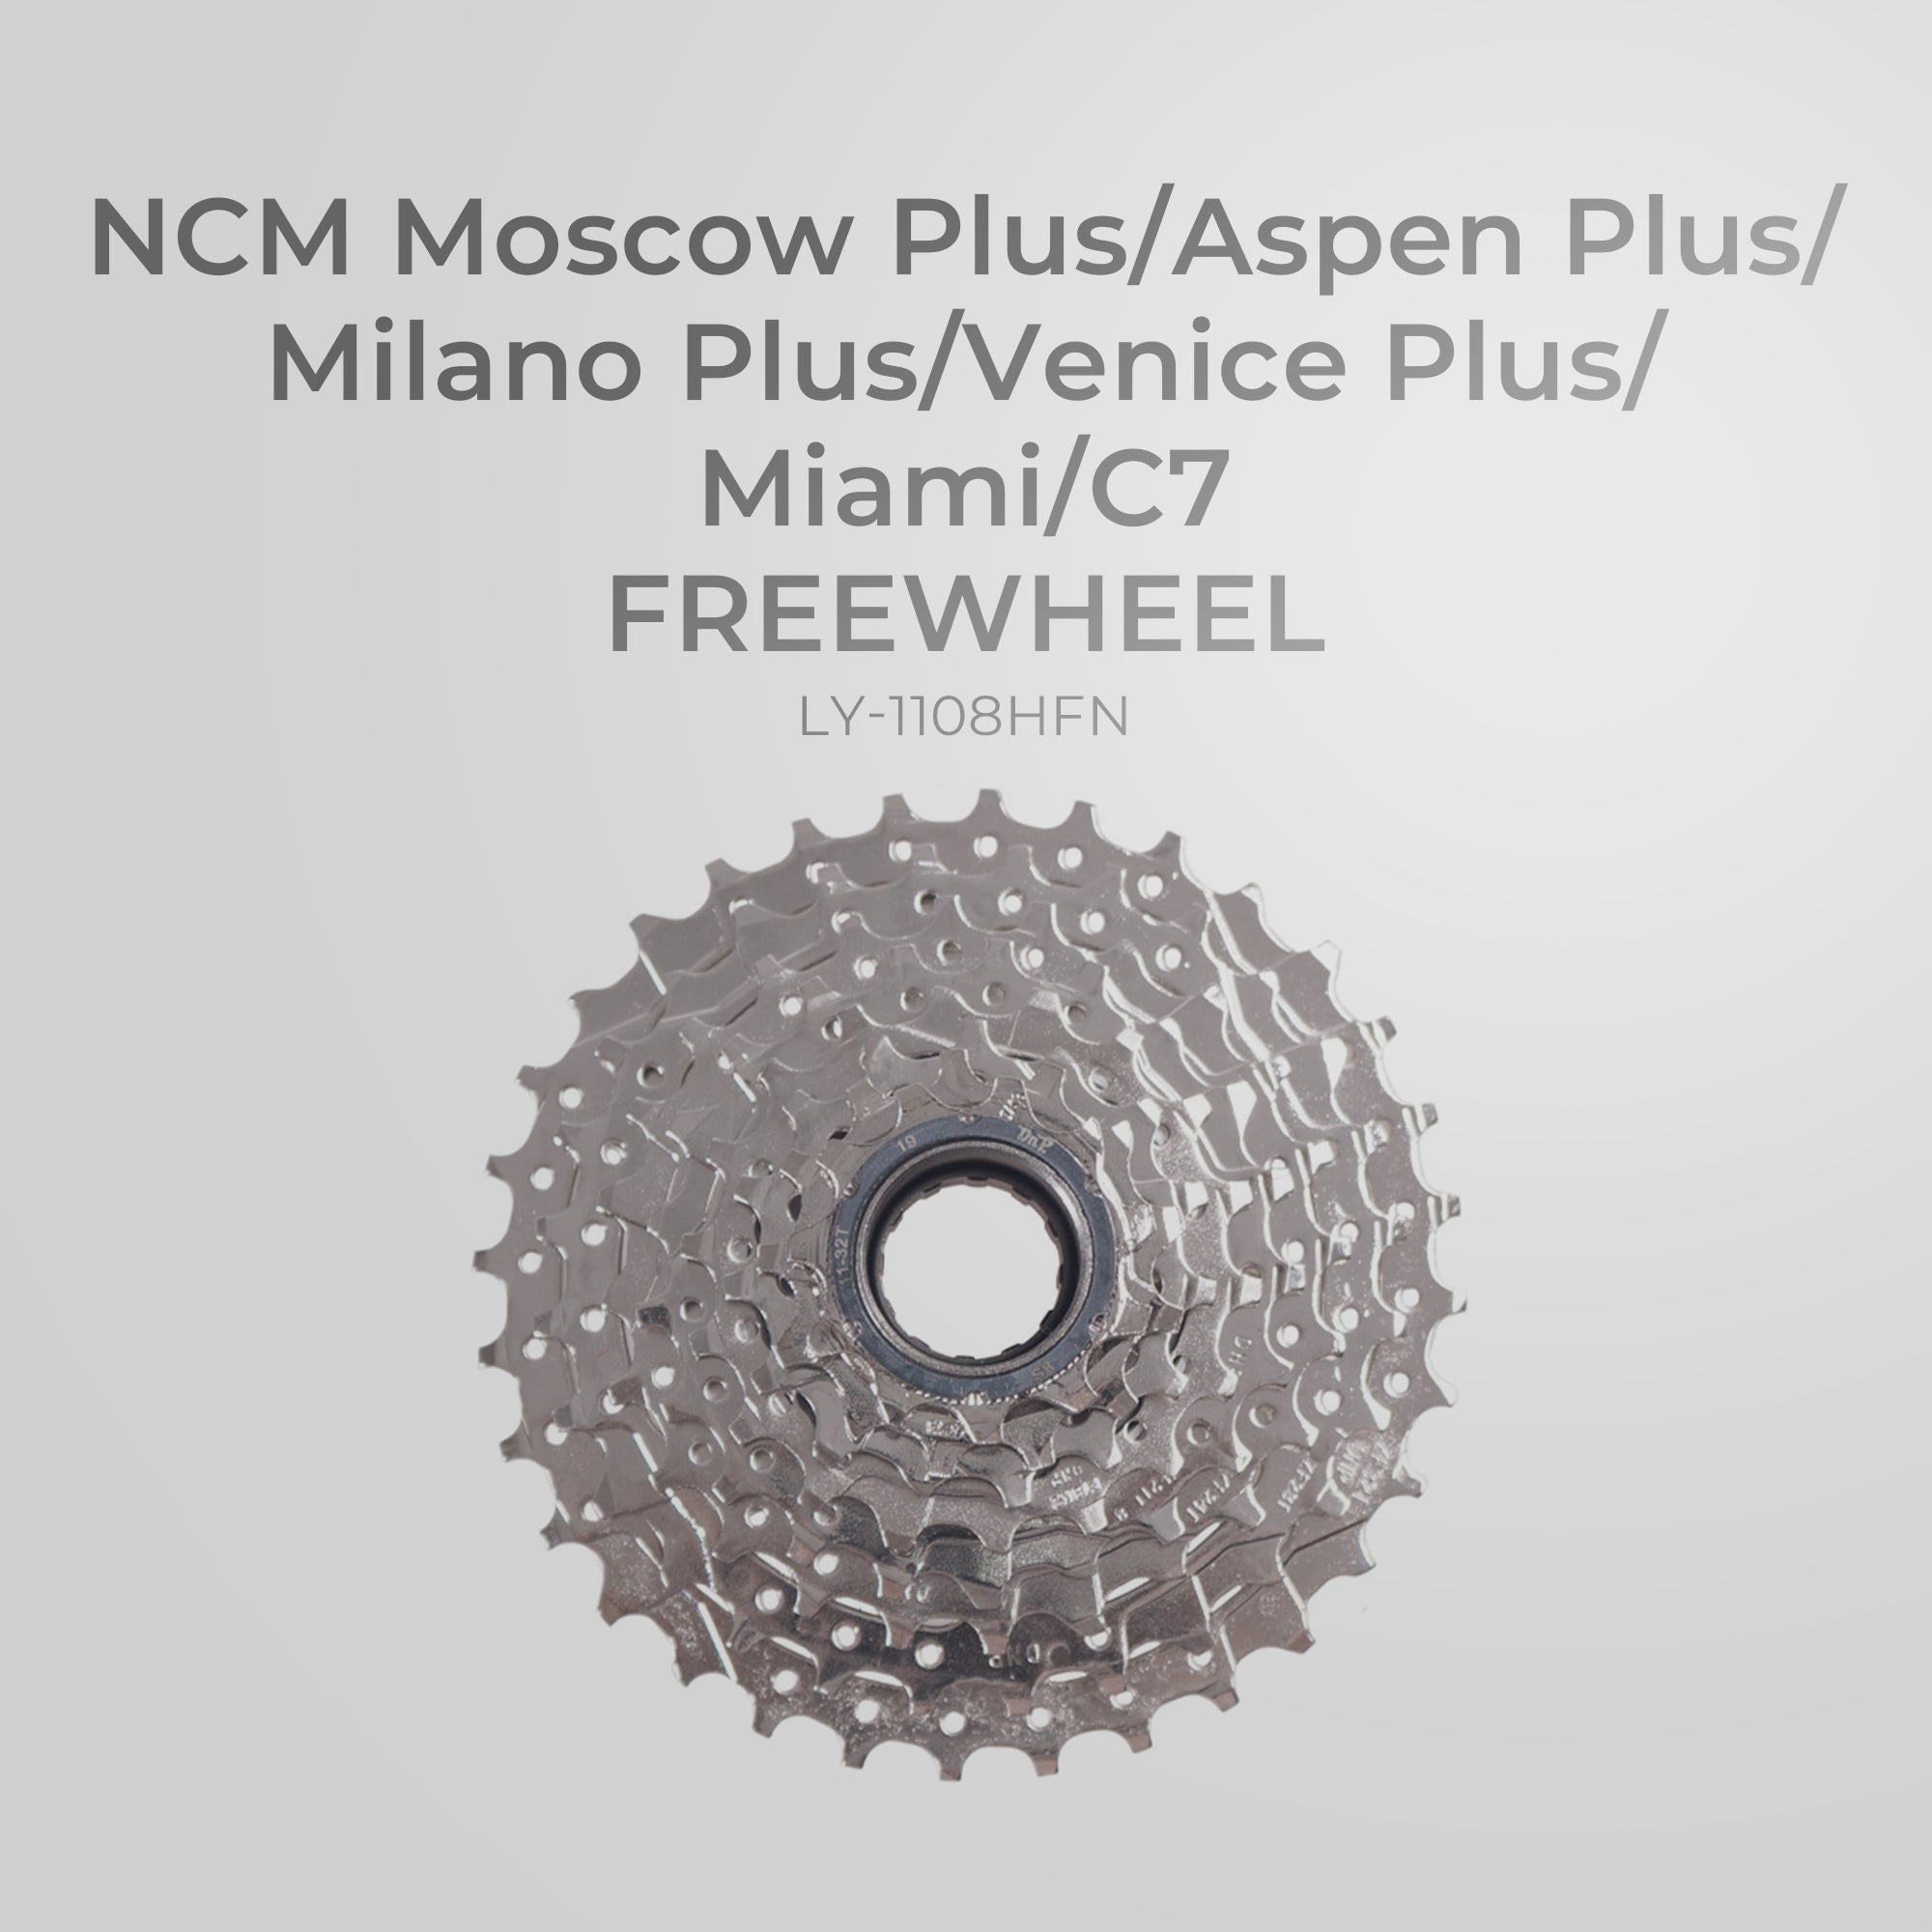 NCM Moscow Plus/Aspen Plus/Milano Plus/Venice Plus/Miami/C7 Freewheel - LY-1108HFN